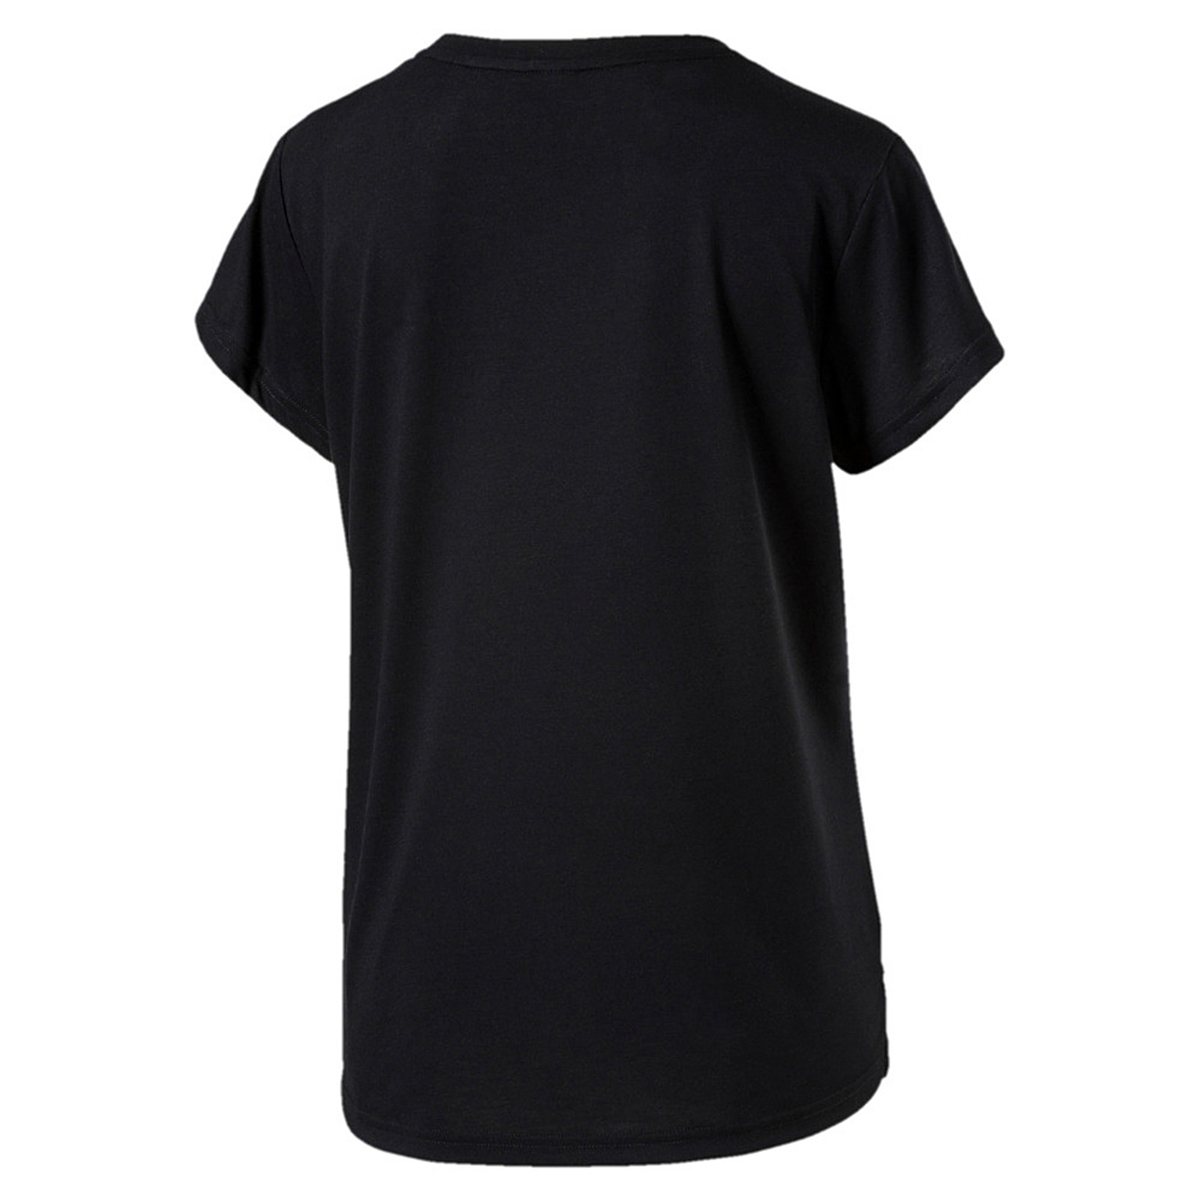 PUMA Damen Urban Sports Logo Tee T-shirt Top Dry Cell Black Silver